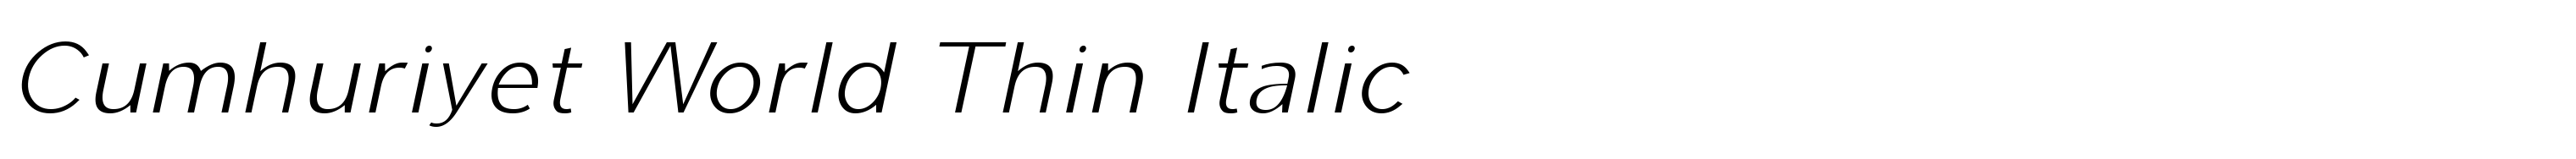 Cumhuriyet World Thin Italic